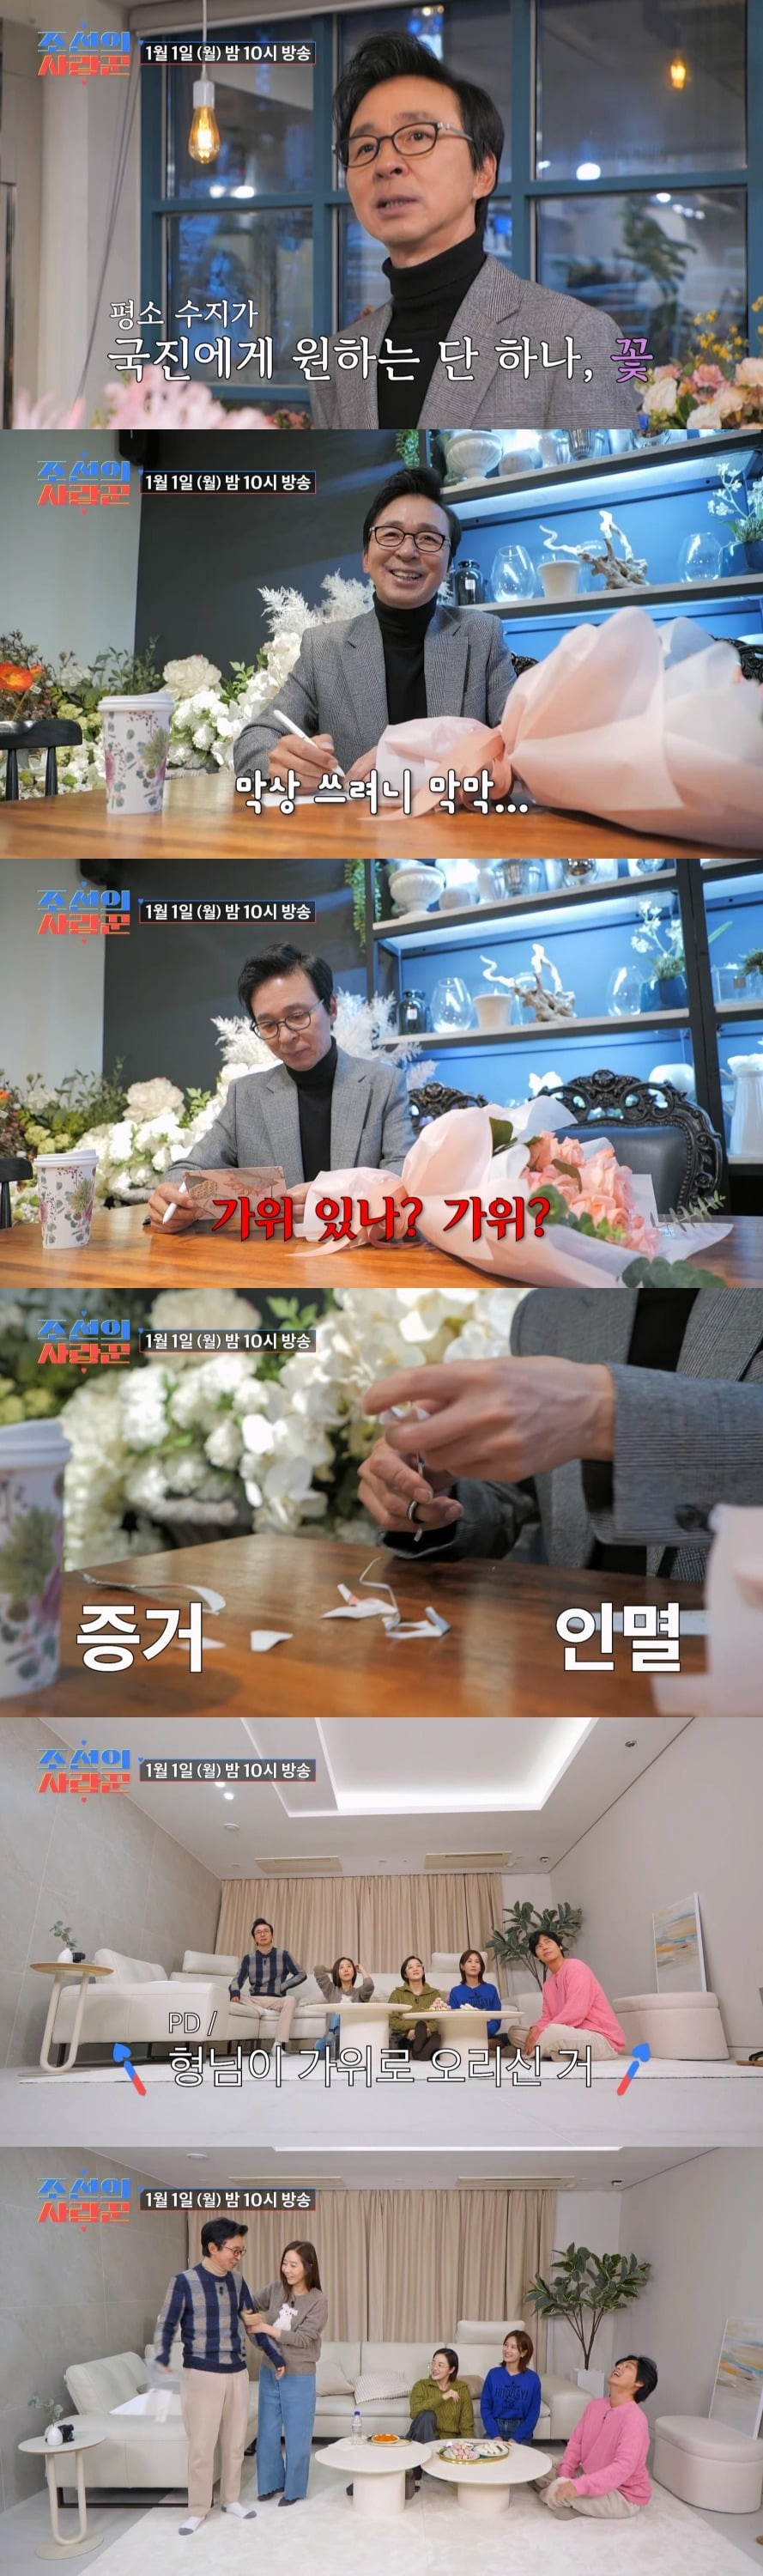 Kim Gook-jin♥Kang Su-ji reveals their married life on New Year's Day 204